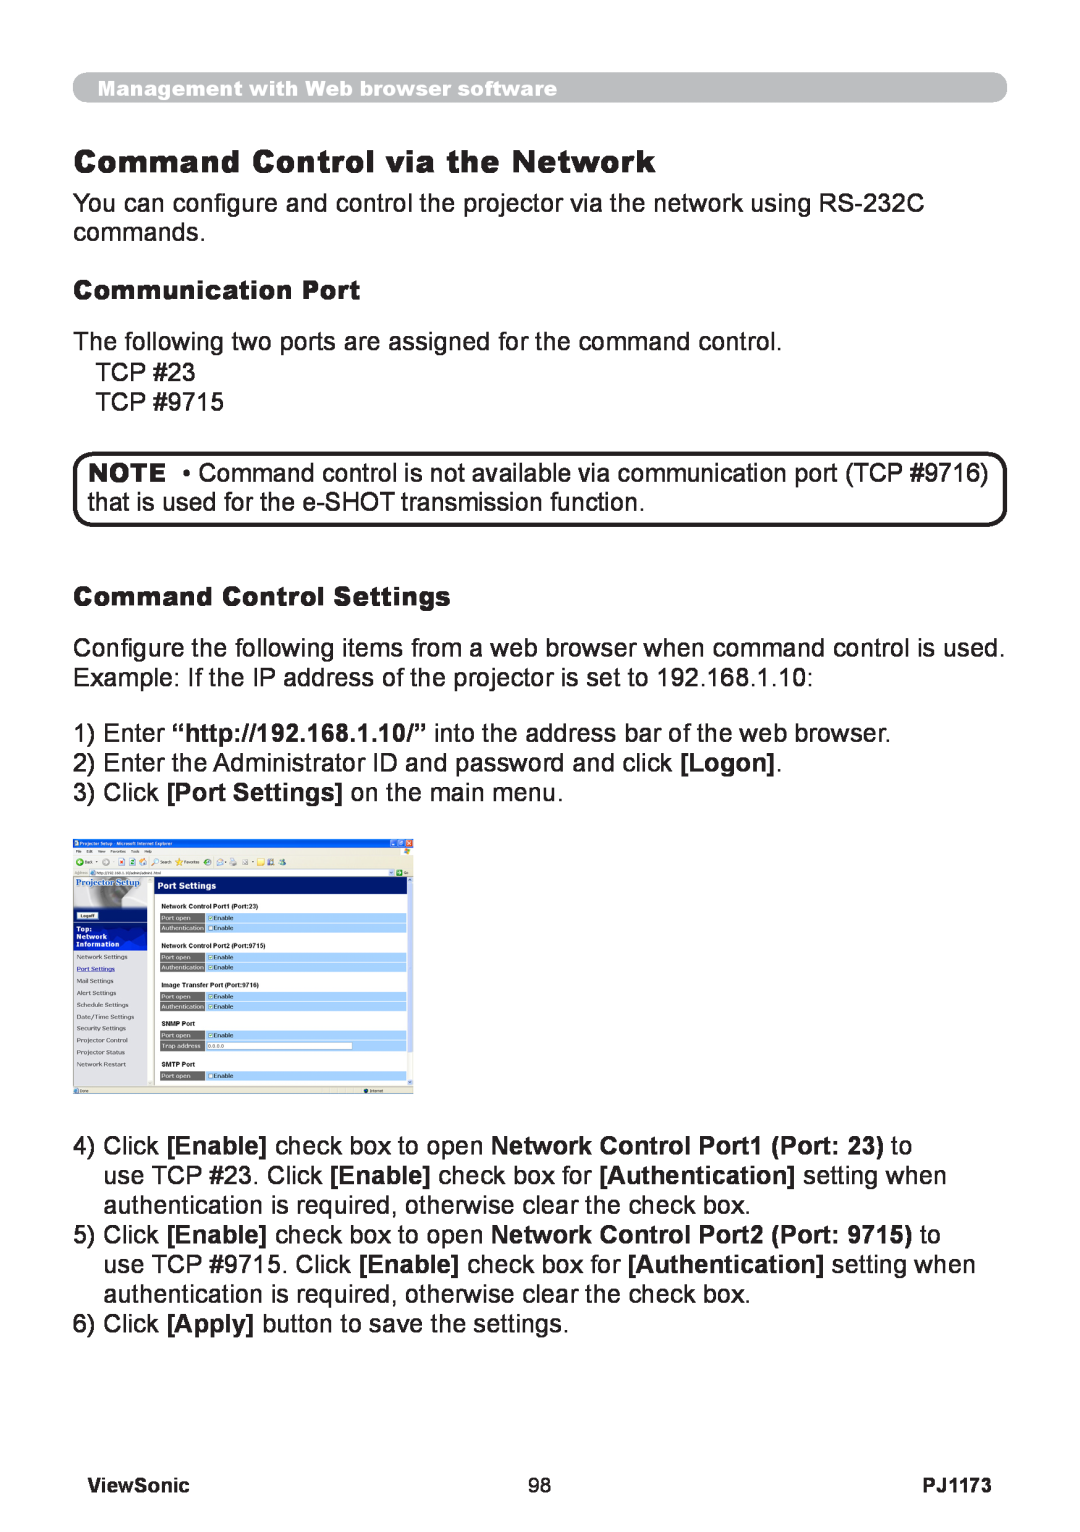 ViewSonic PJ1173, VS12109 warranty Command Control via the Network, Communication Port, Command Control Settings 